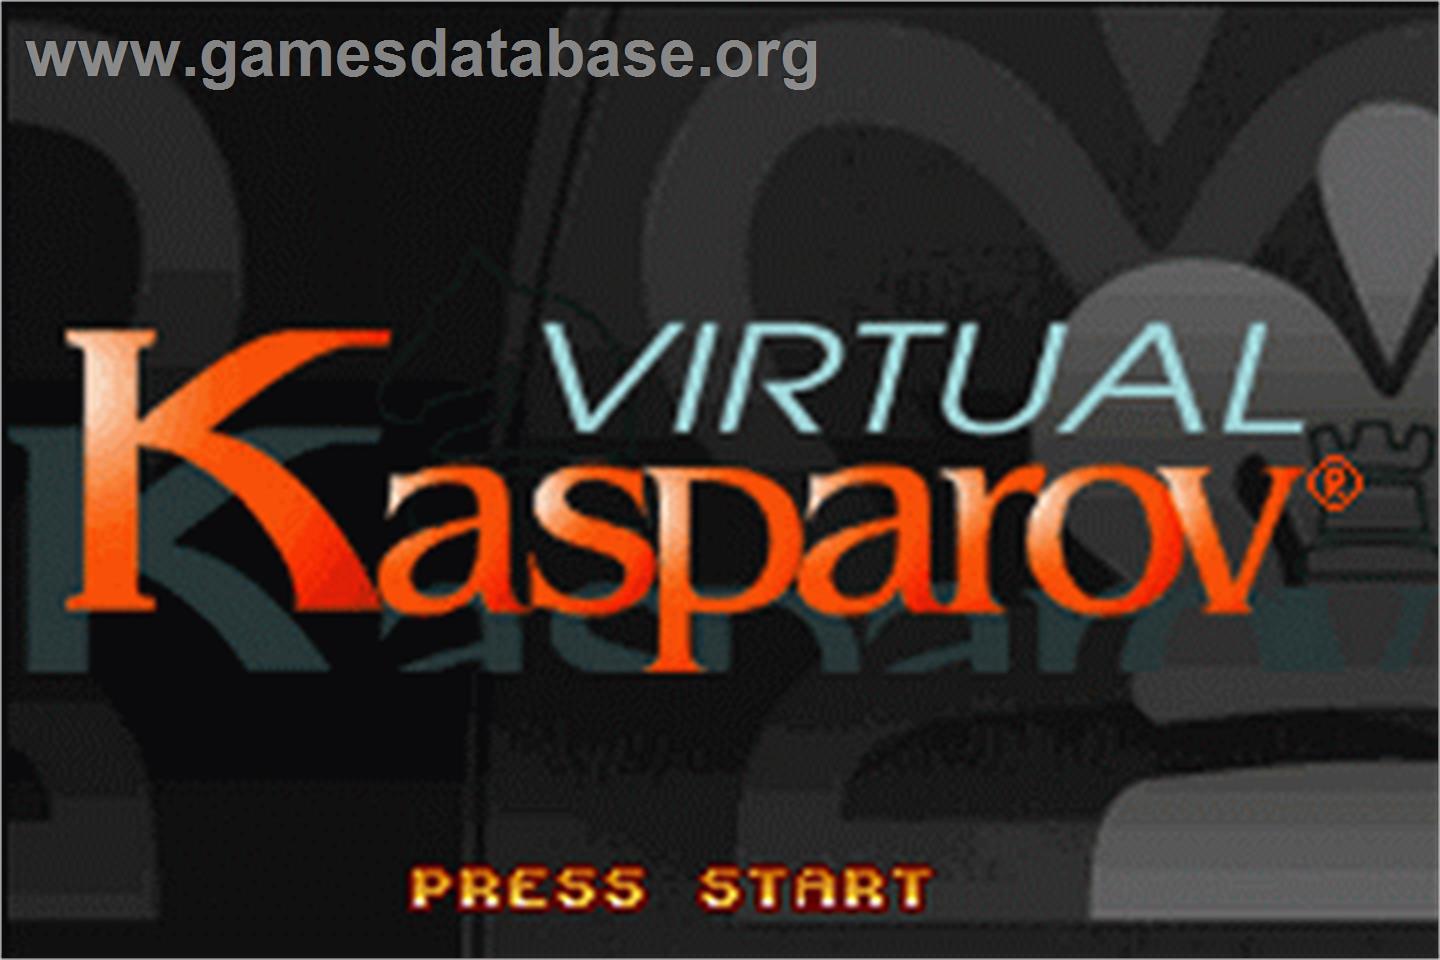 Virtual Kasparov - Nintendo Game Boy Advance - Artwork - Title Screen